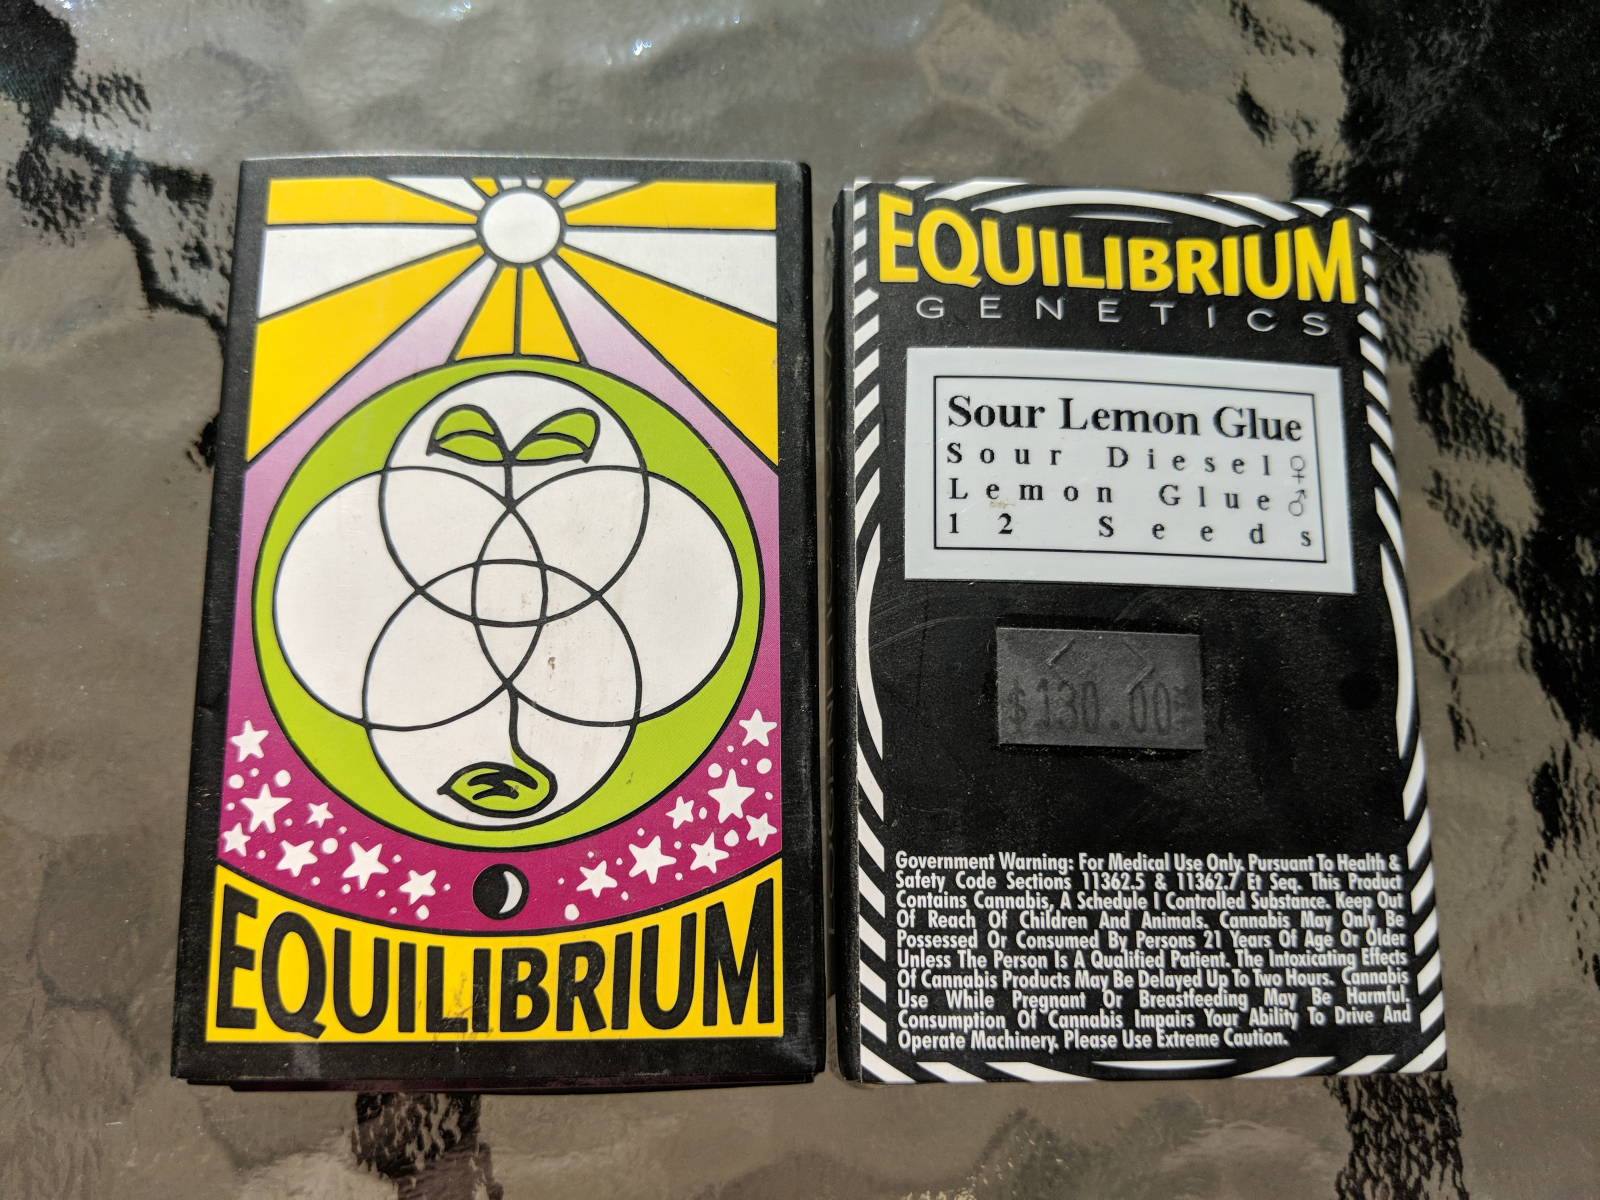 Equilibrium genetics sour lemon glue 12 regular seeds 